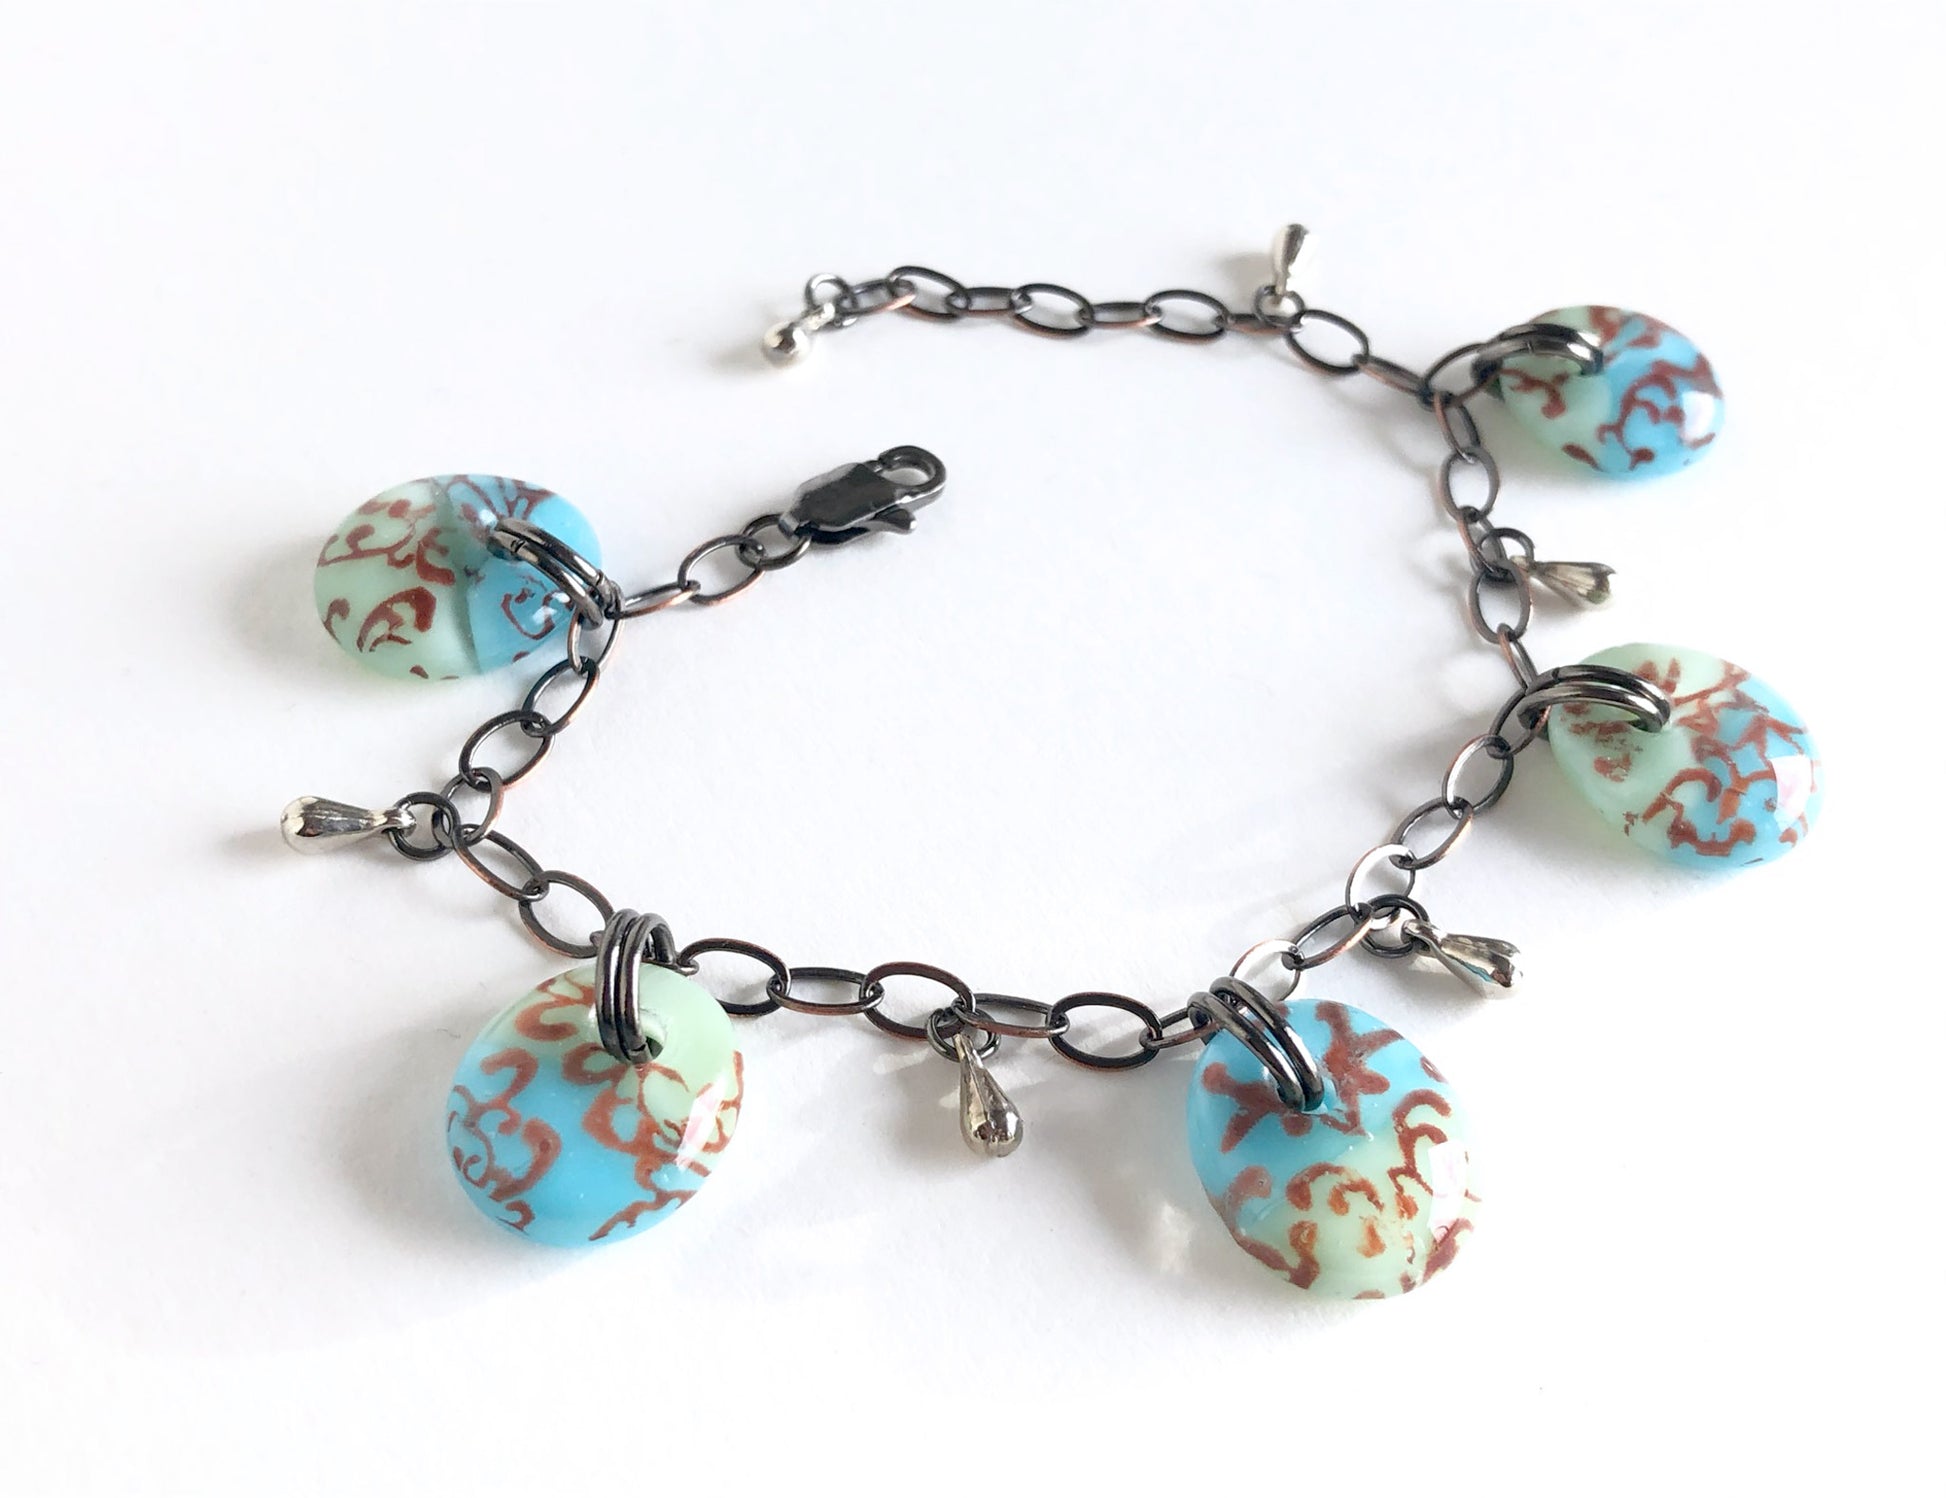 Handmade vintage style blue and green glass drop bracelet.